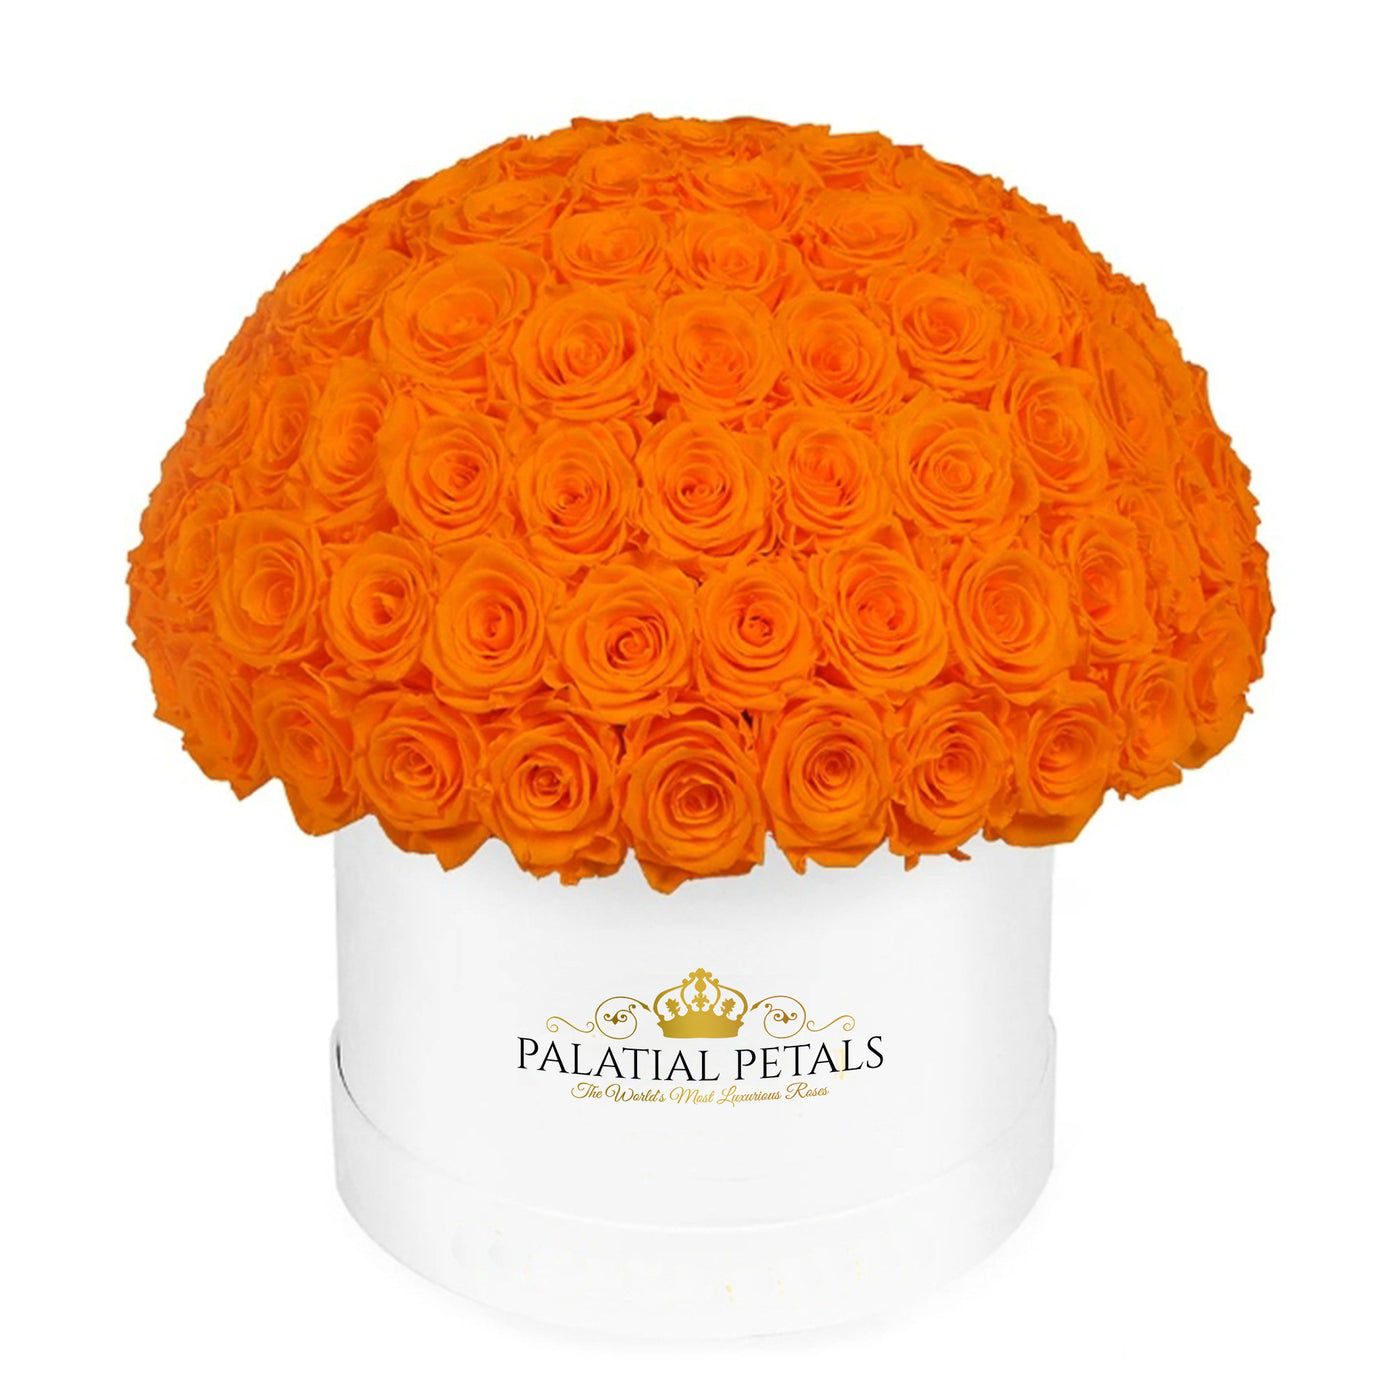 Hermès Orange Roses That Last A Year - Grande "Crown" Rose Box